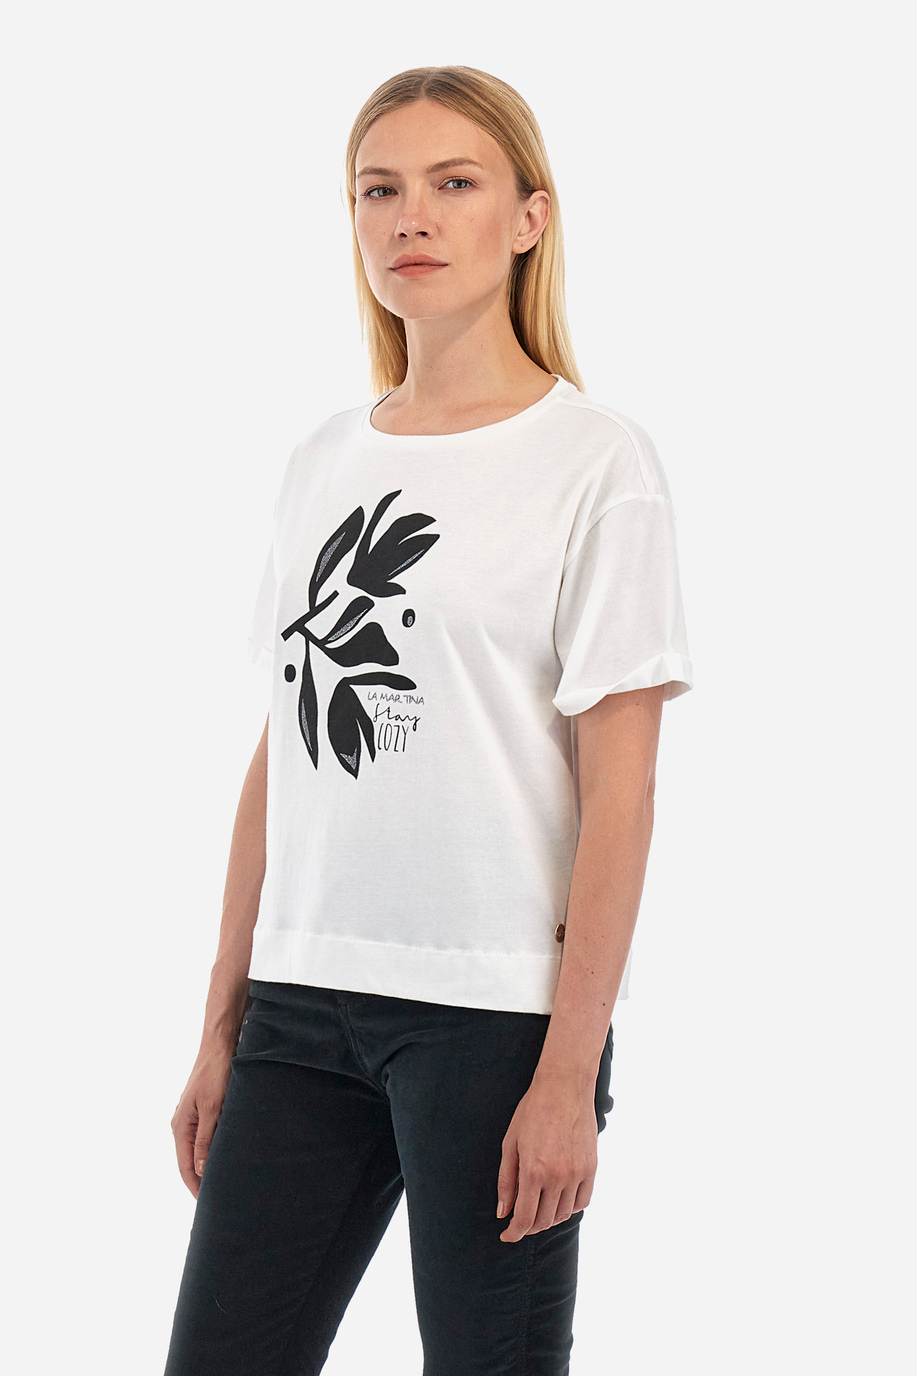 Tee-shirt femme coupe classique - Welda | La Martina - Official Online Shop